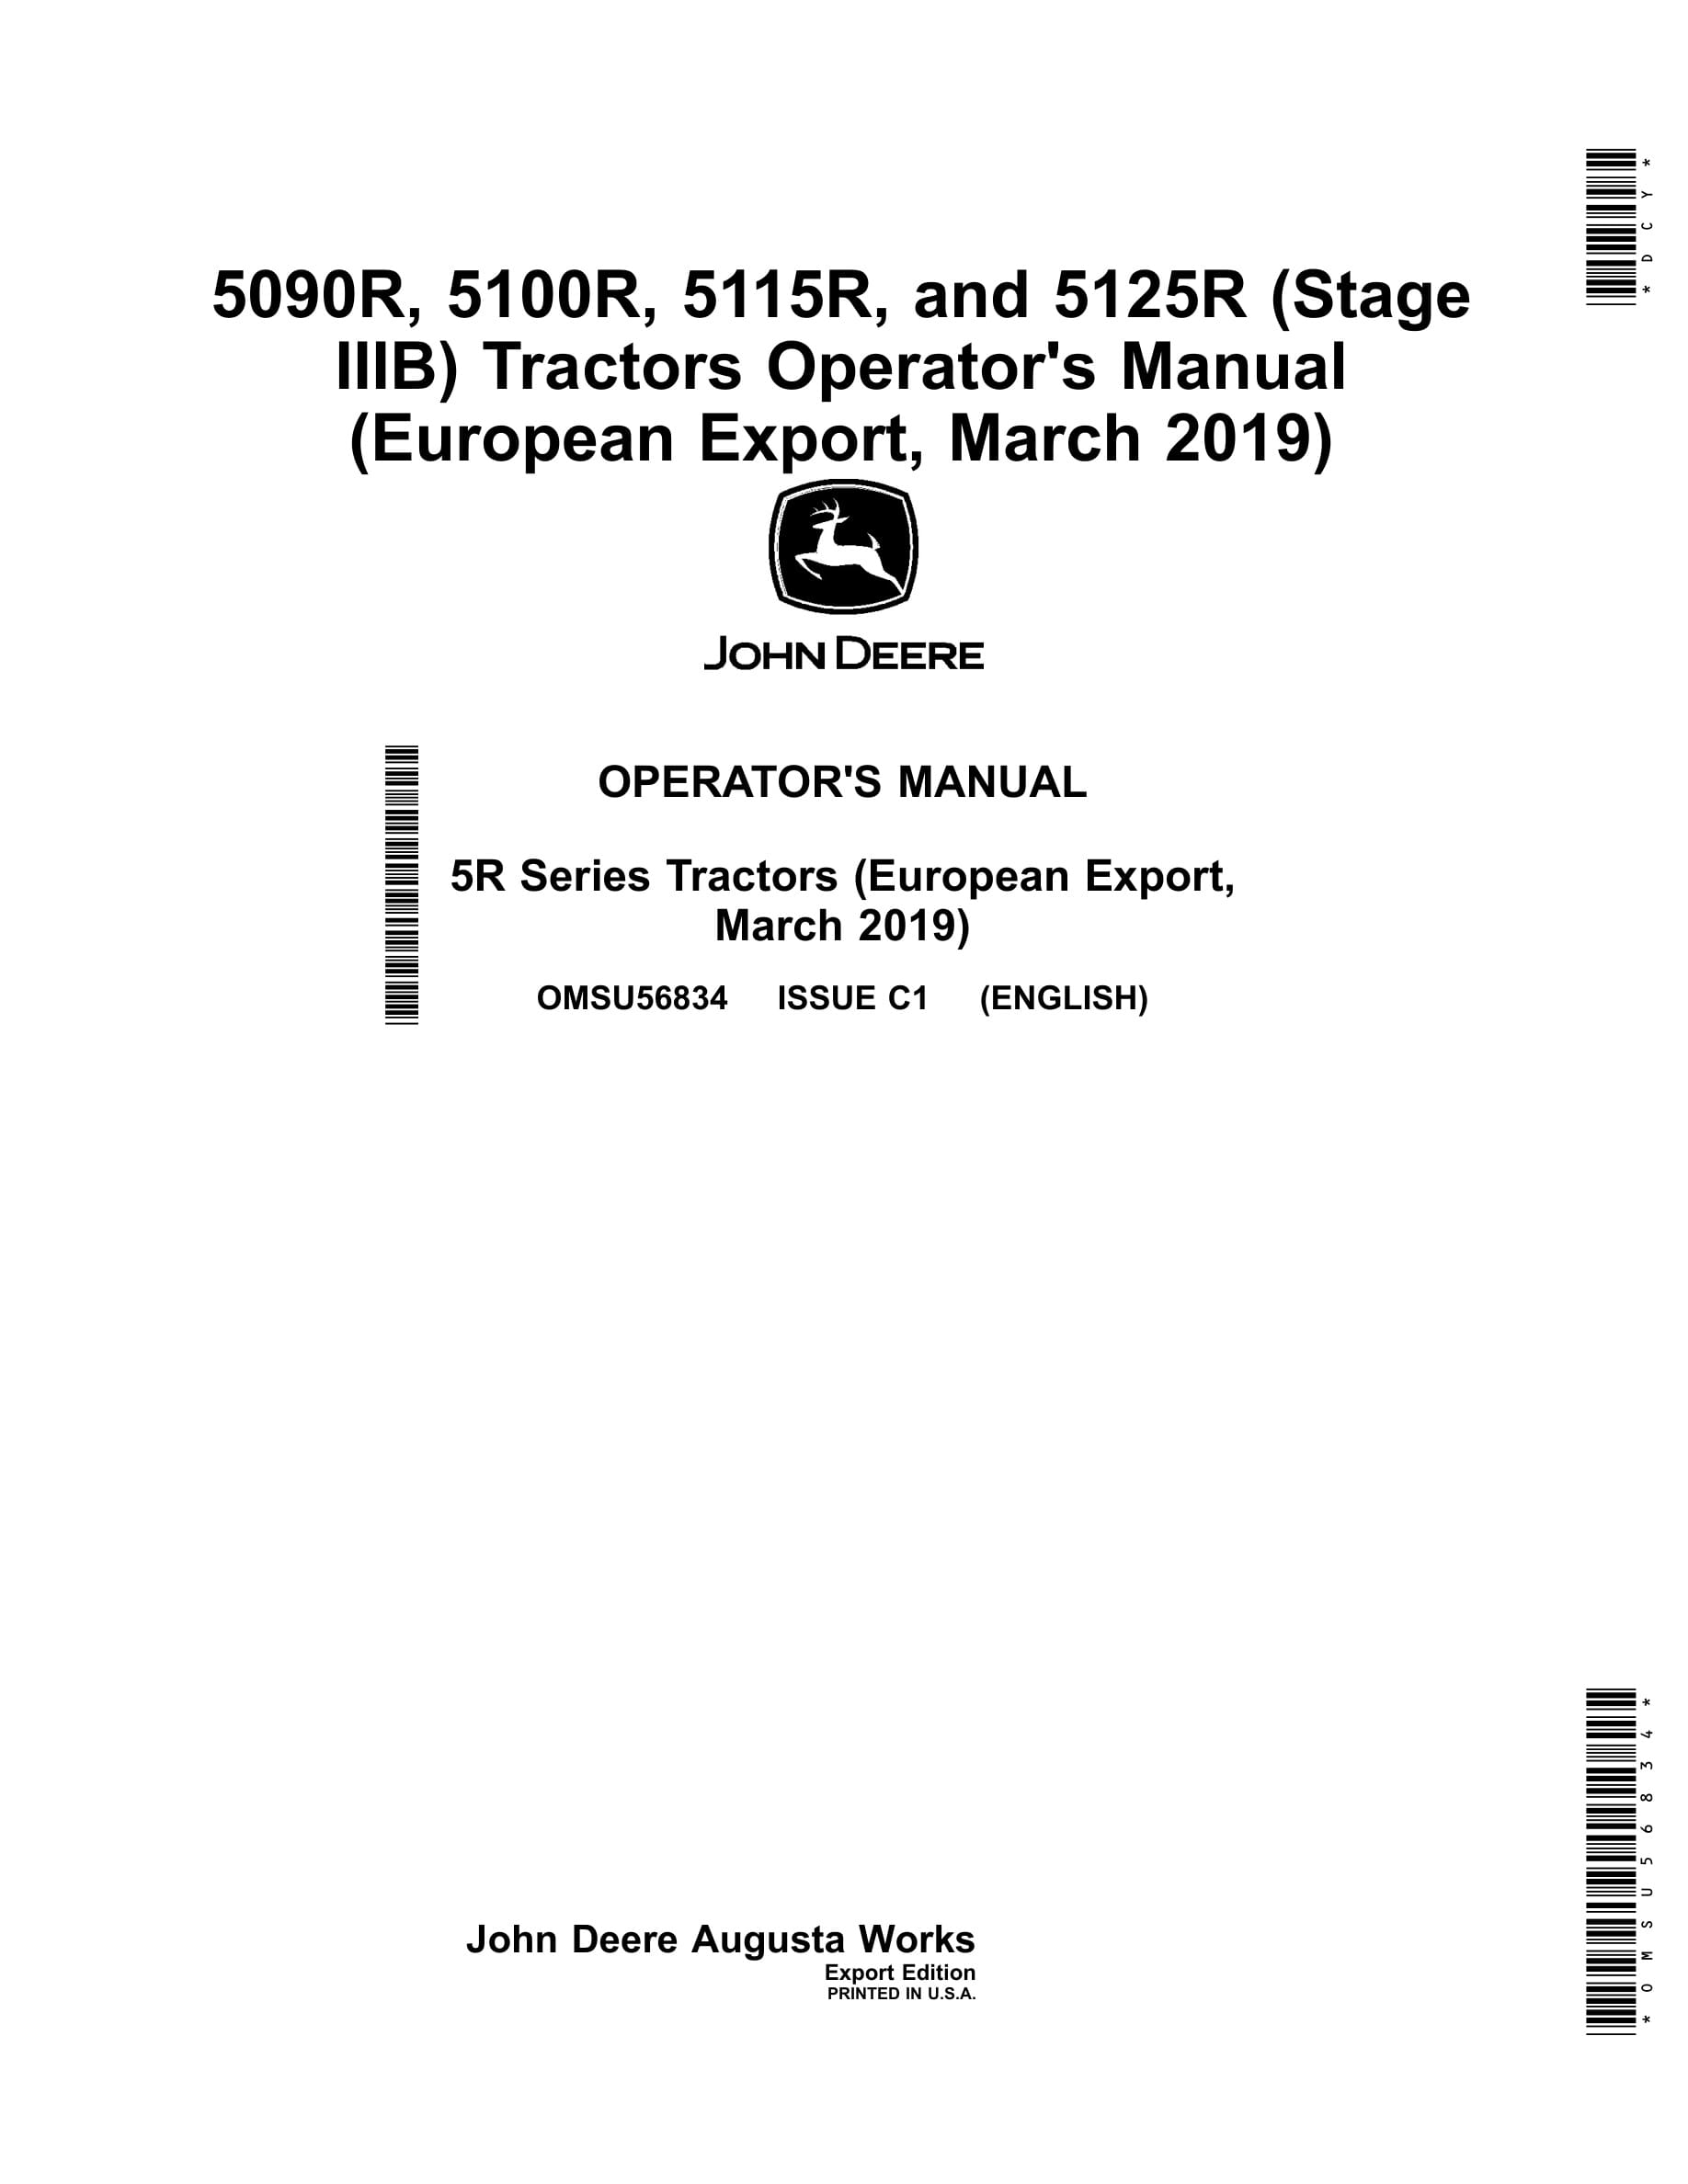 John Deere 5090r, 5100r, 5115r, And 5125r (stage Iiib) Tractors Operator Manuals OMSU56834-1